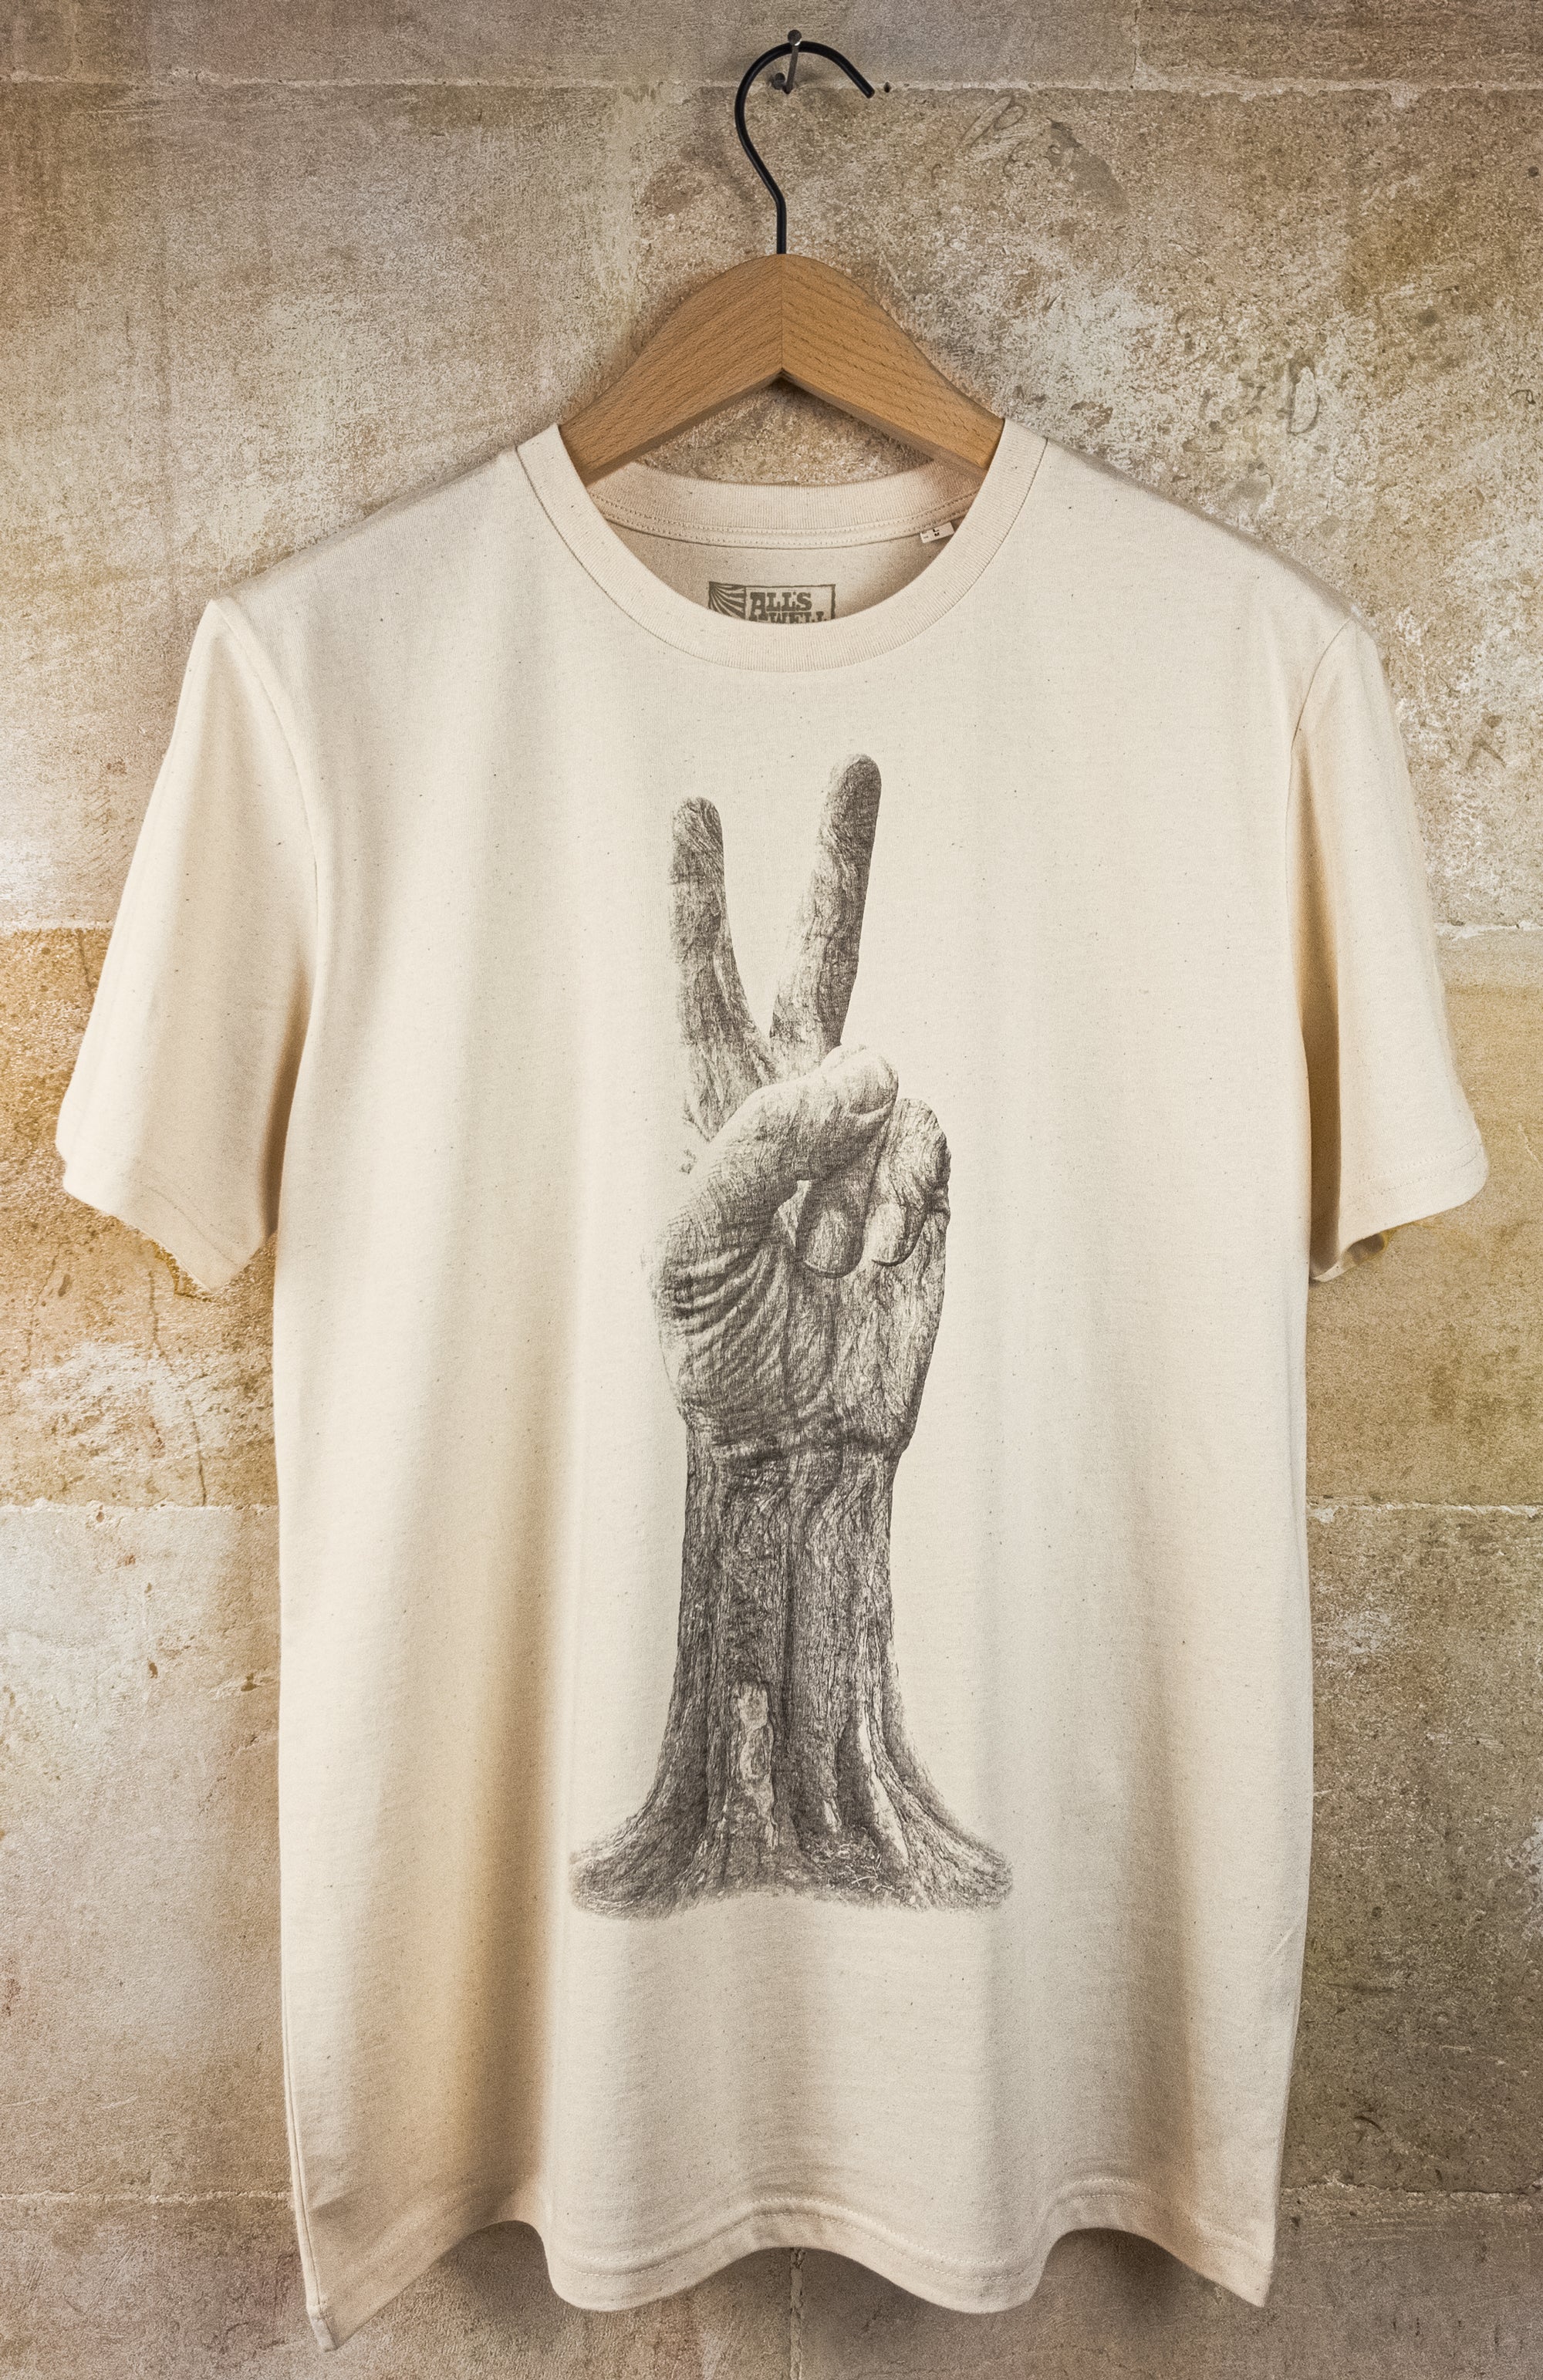 All's Well Originals Peace Sign mens/unisex natural t-shirt hand printed 100% organic cotton t-shirt